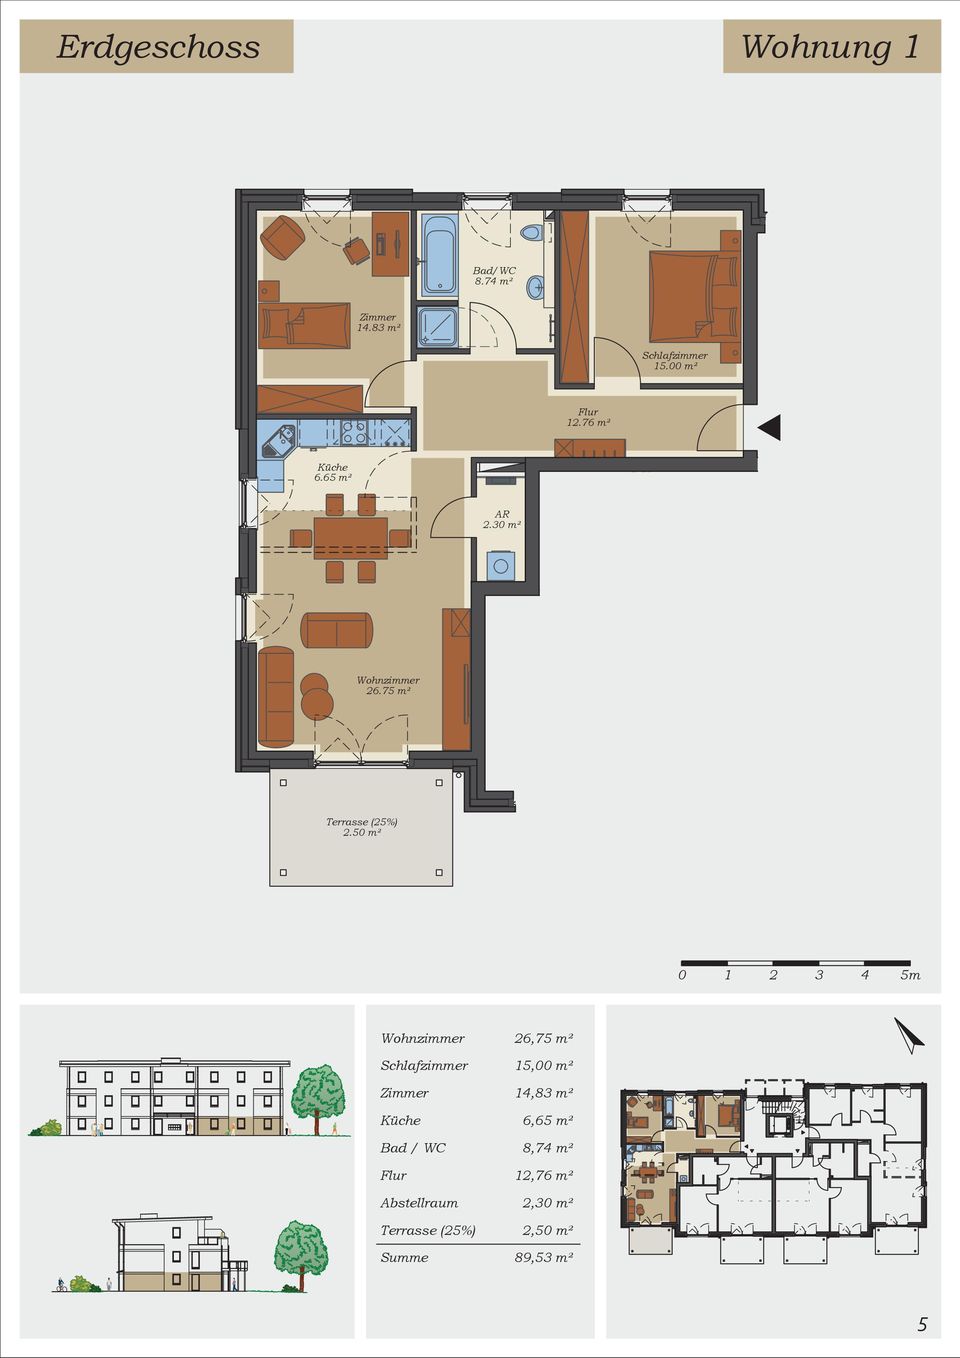 50 m² 0 1 2 3 4 5m Zimmer Bad / WC Summe 26,75 m²